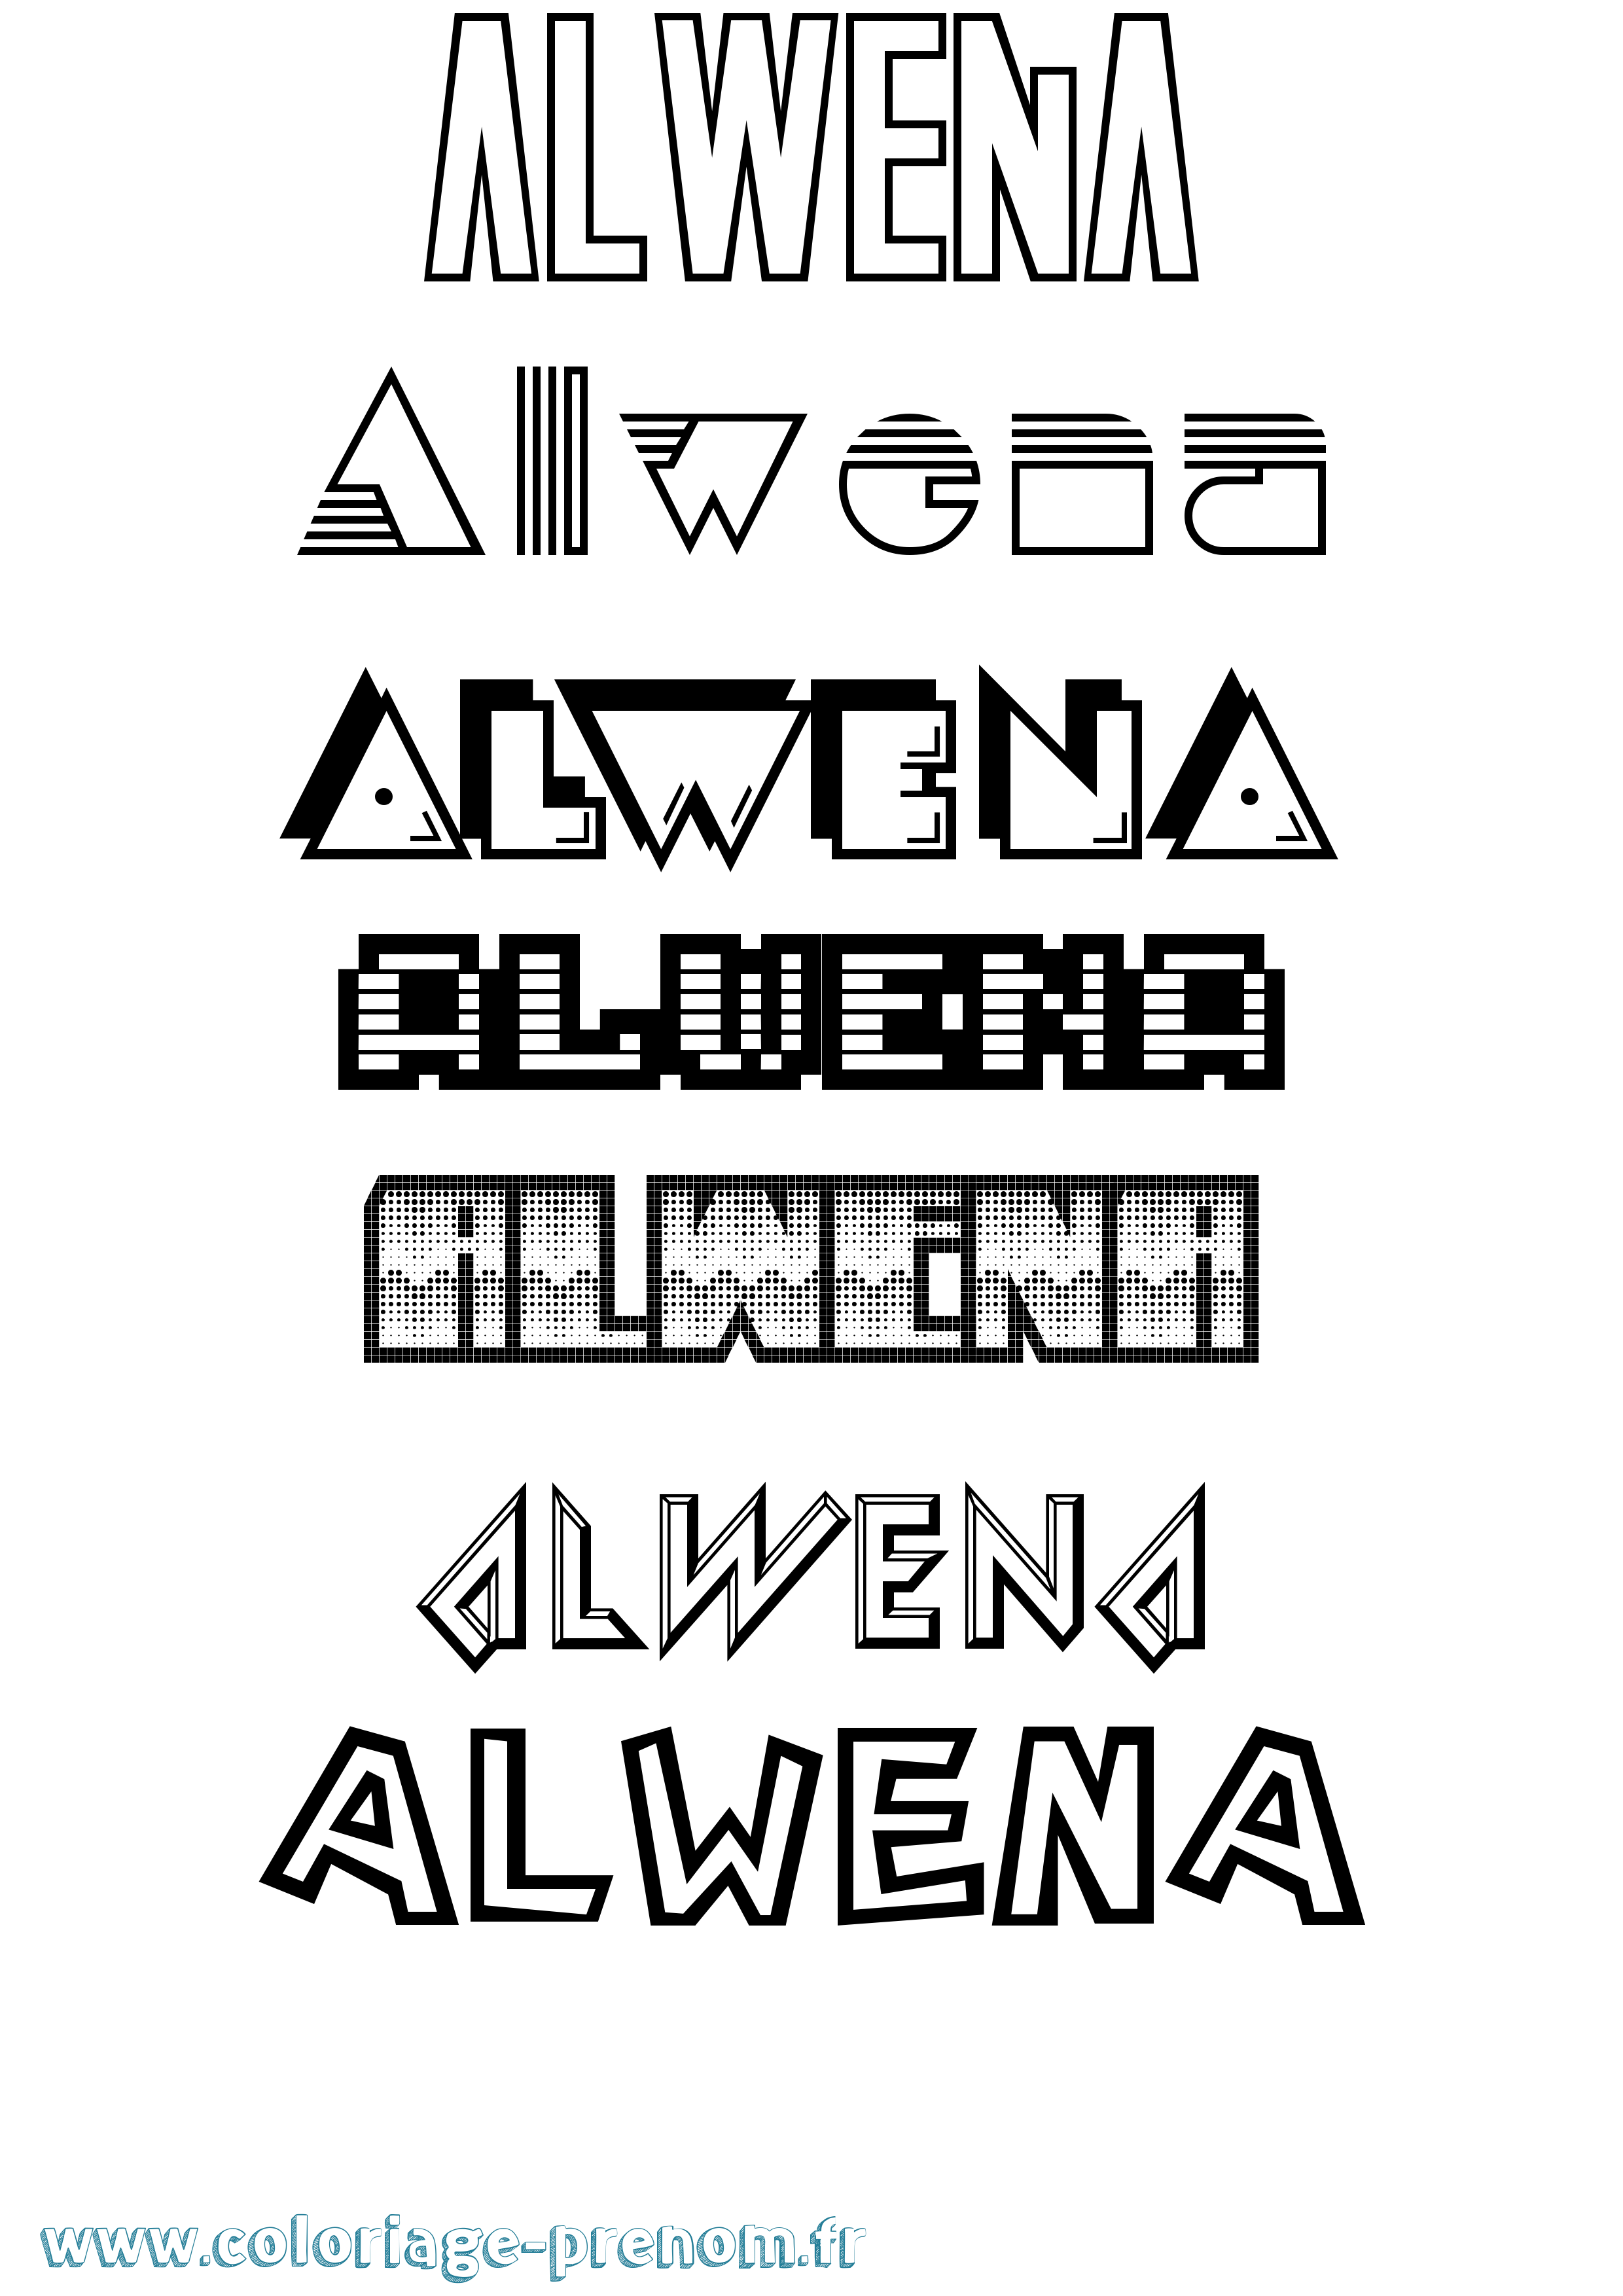 Coloriage prénom Alwena Jeux Vidéos